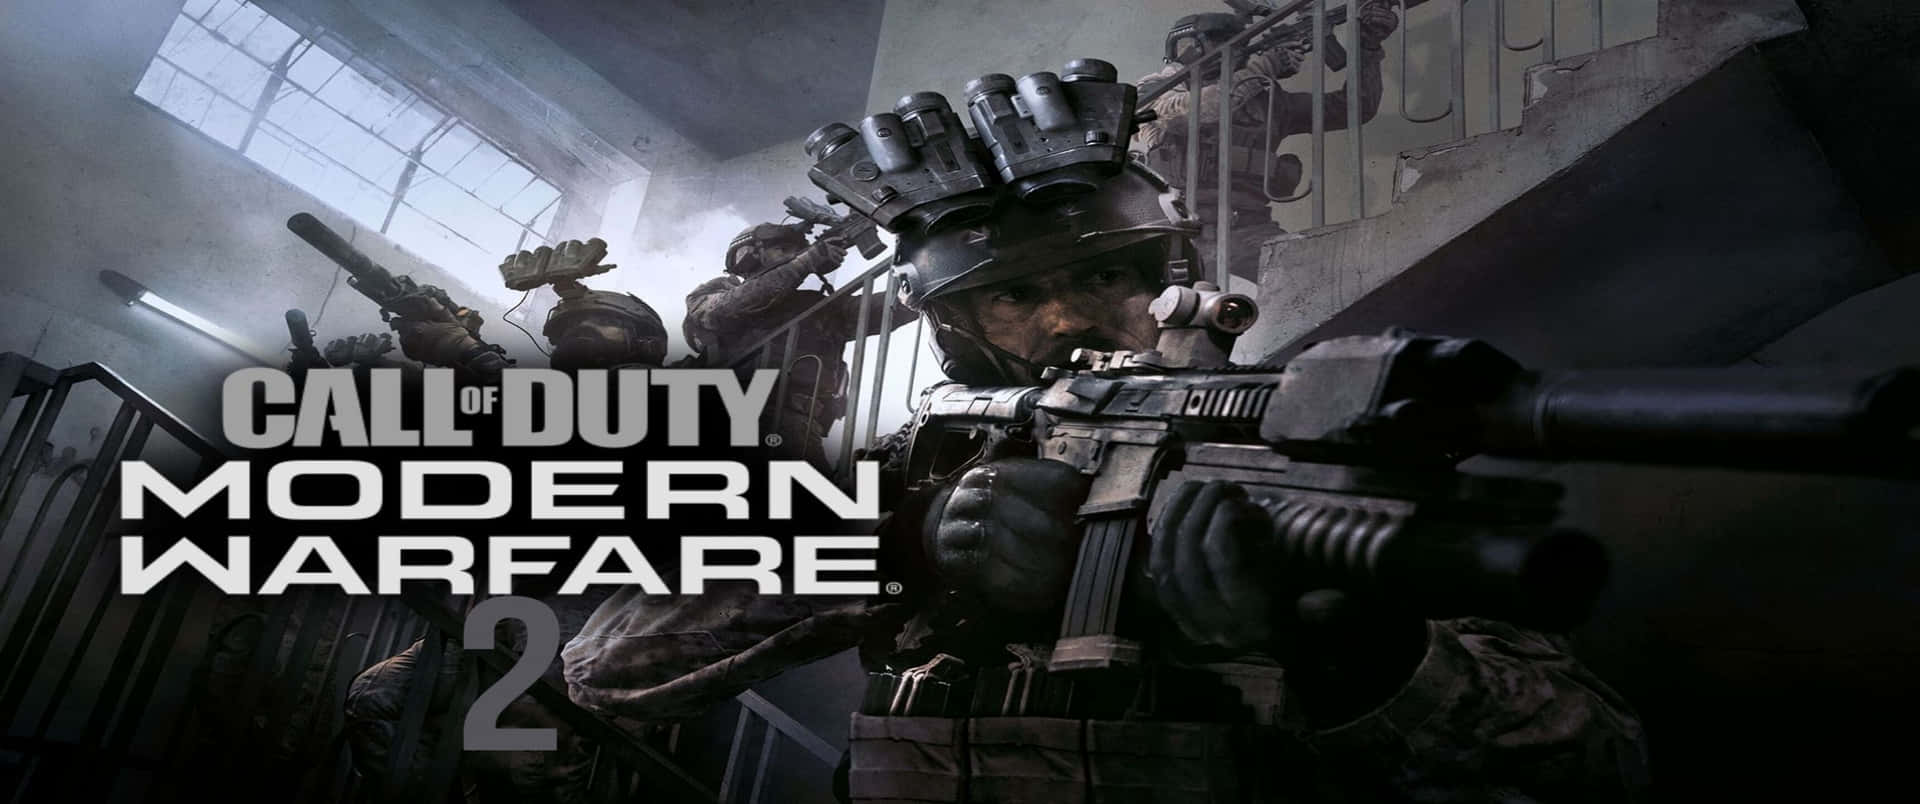 Alexkeller 3440x1440p Call Of Duty Modern Warfare Bakgrundsbild.